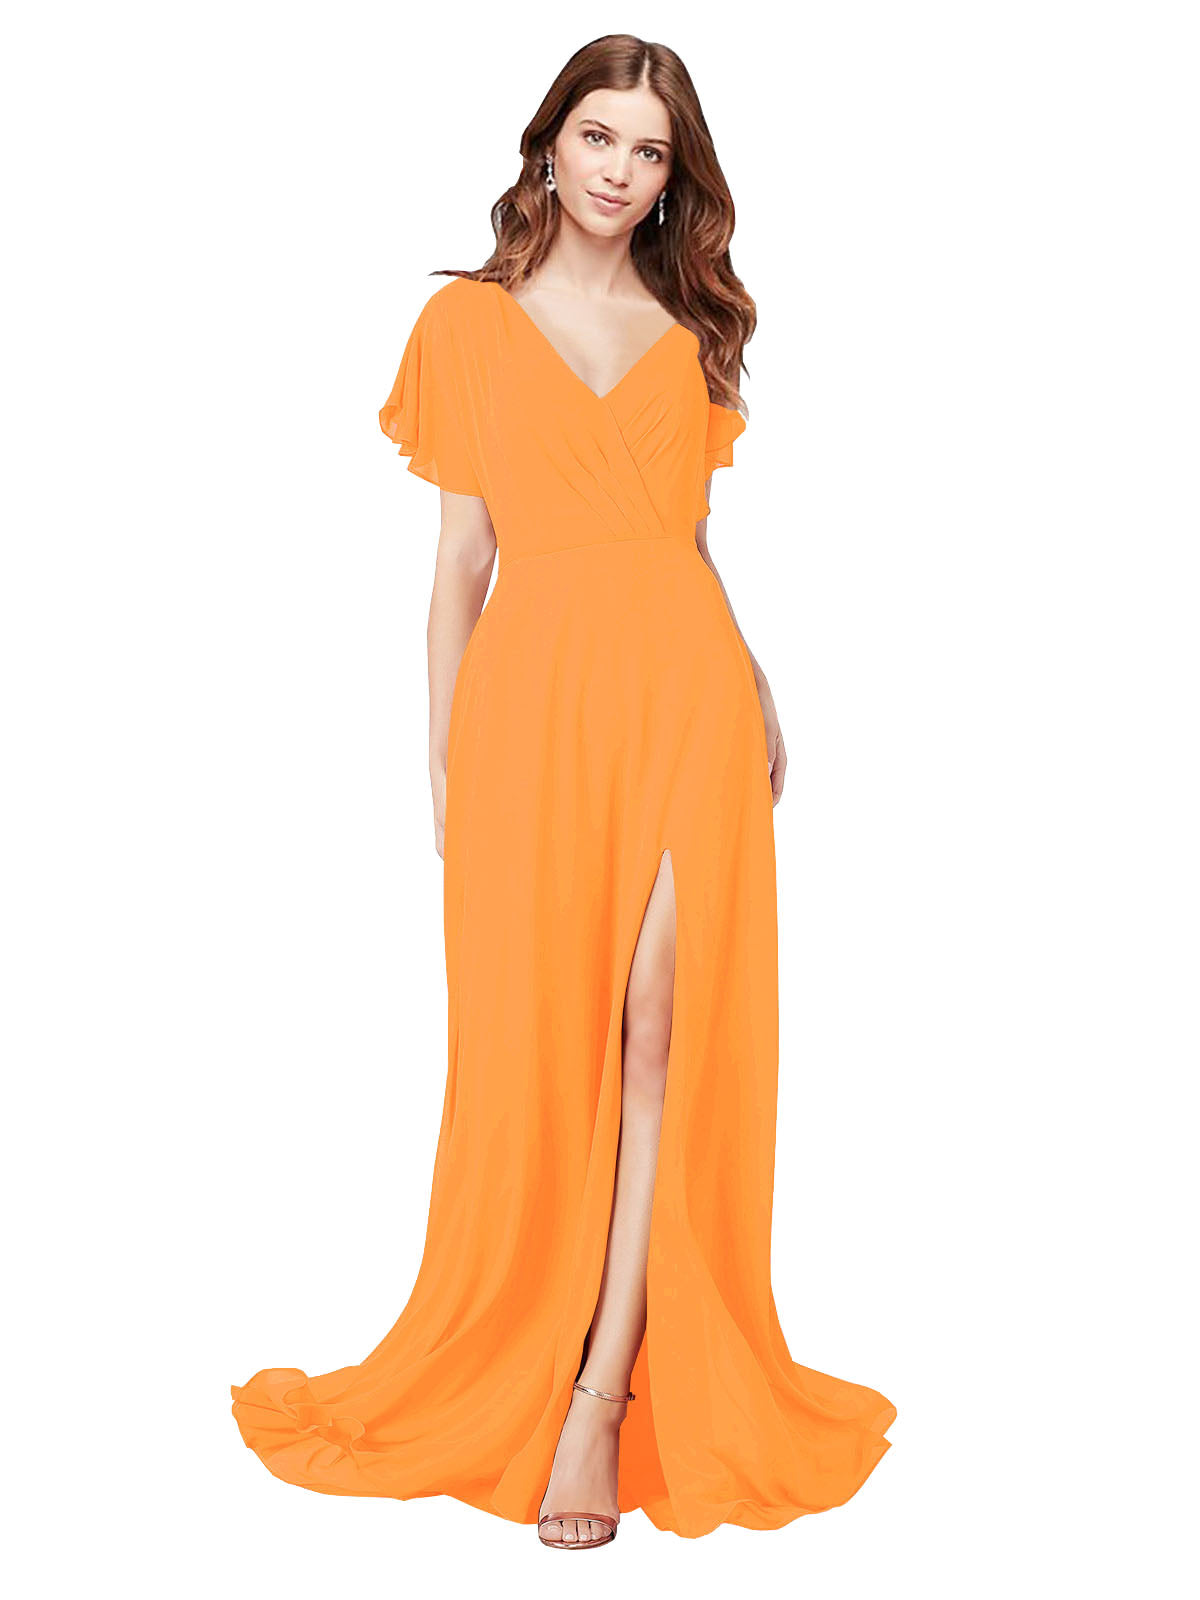 RightBrides Marisol Orange A-Line V-Neck Cap Sleeves Long Bridesmaid Dress